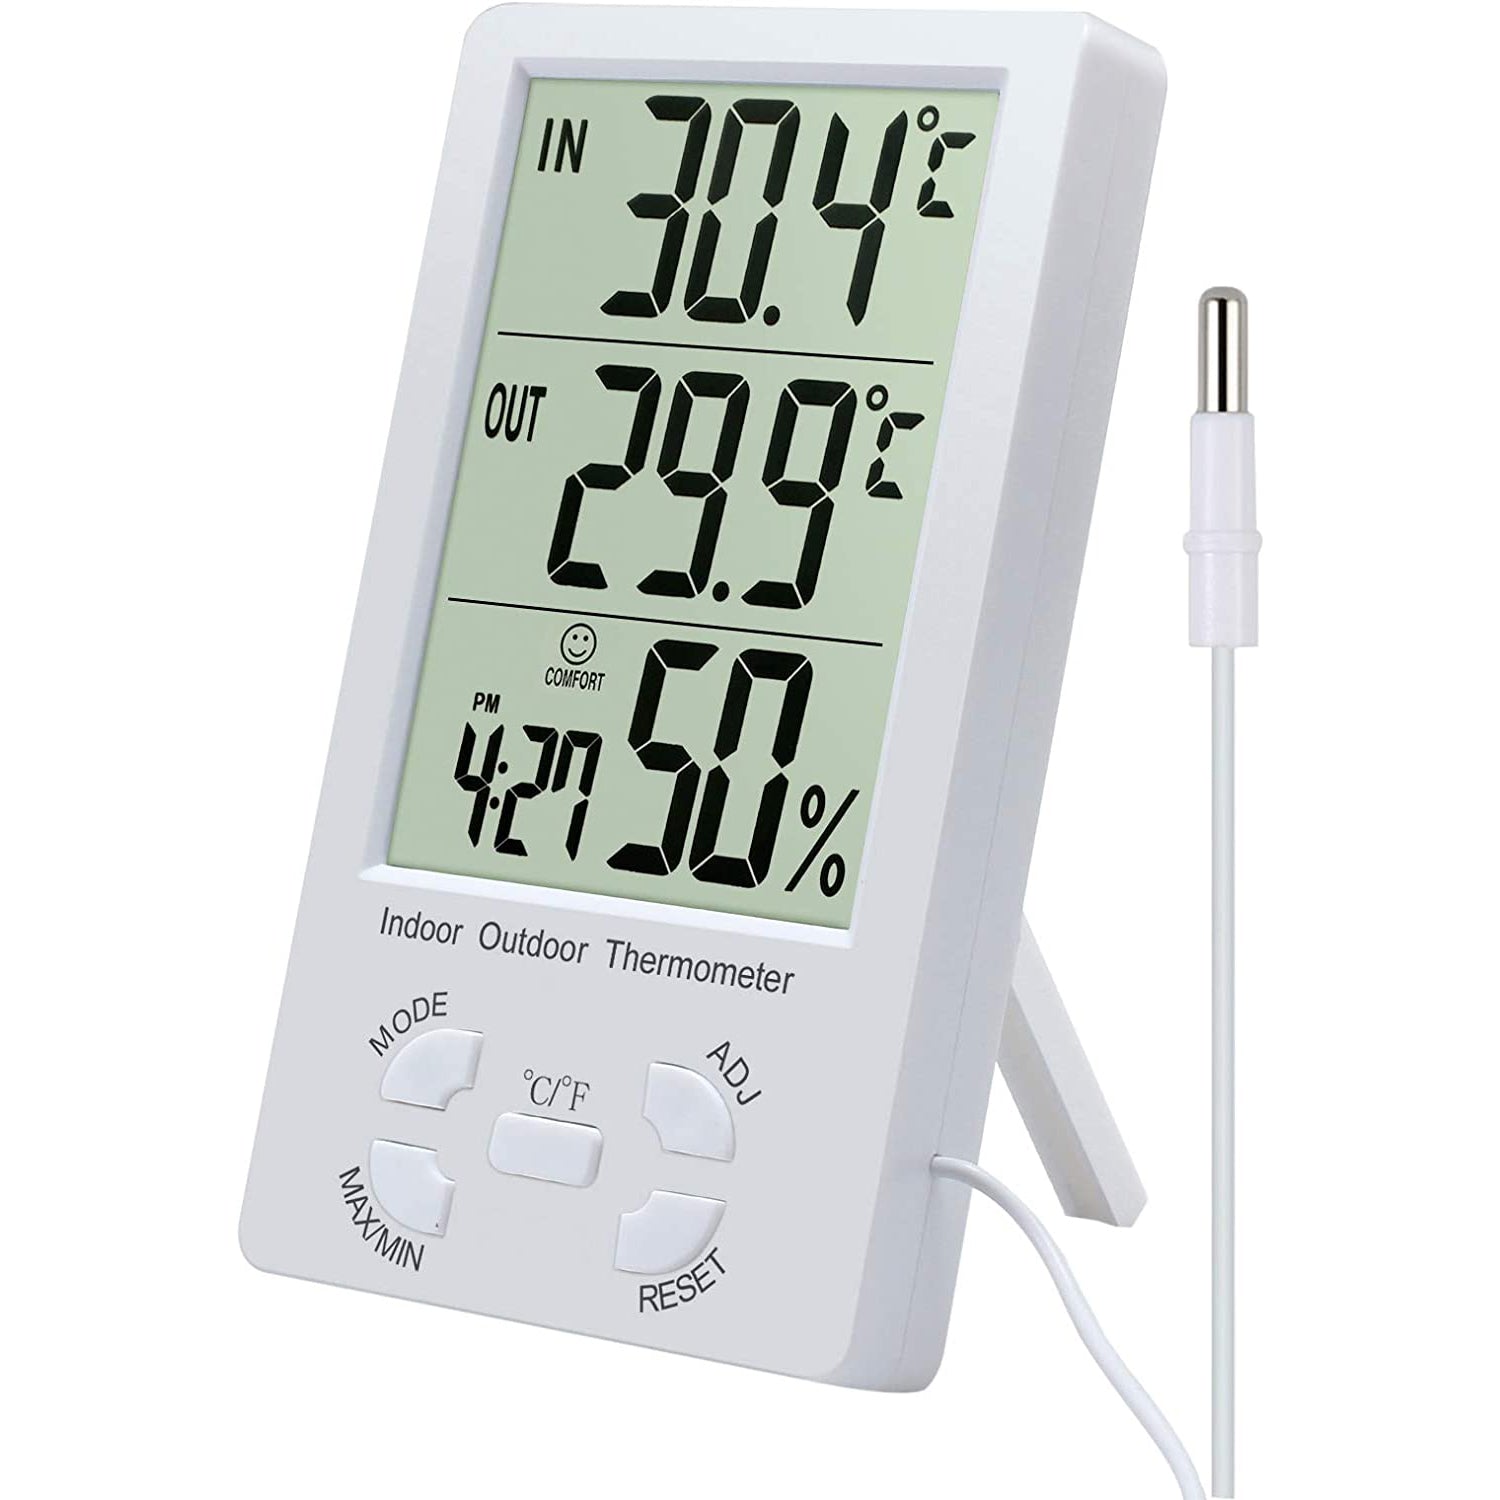 TA298 - Multicomp Pro - Thermometer, Hygrometer Clock, Indoor/Outdoor